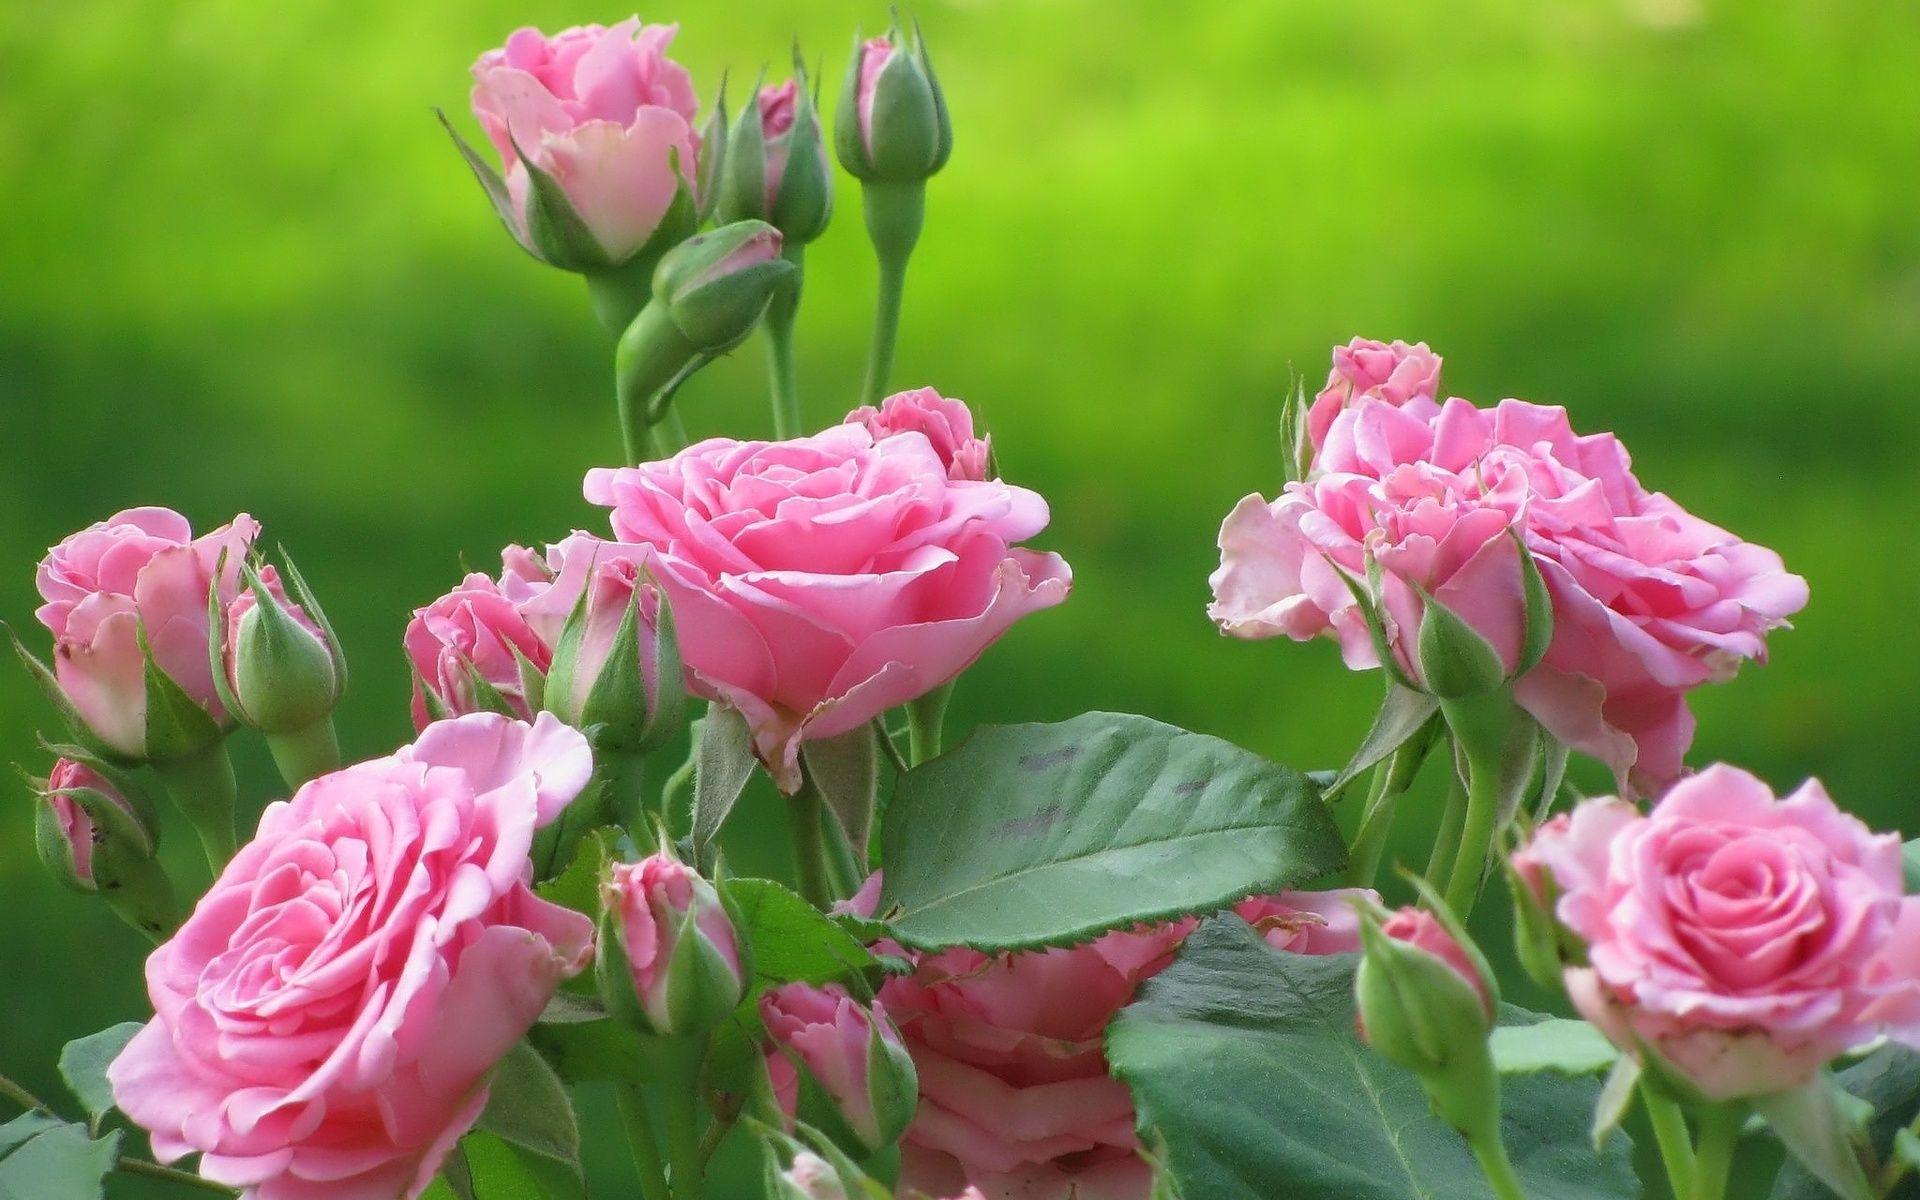 Rose Flower Wallpaper Desktop Flowers For Background High Quality